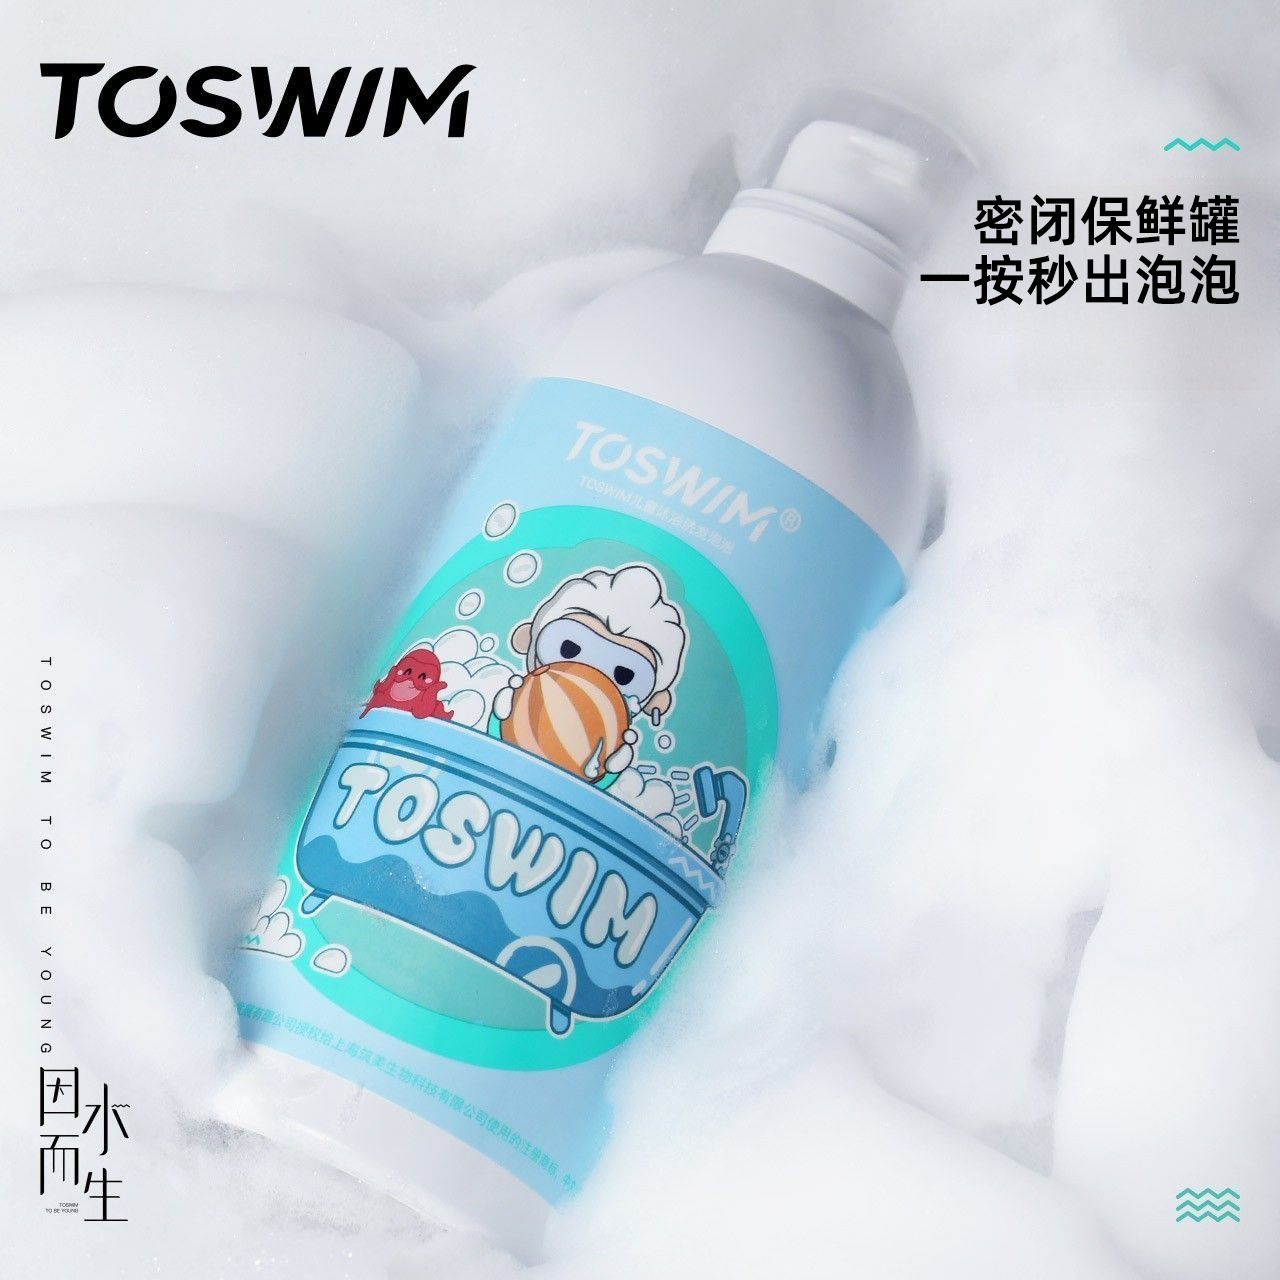 TOSWIM儿童游泳专用去氯沐浴露洗发水二合一洗护温和除氯浴液装备 - 图0